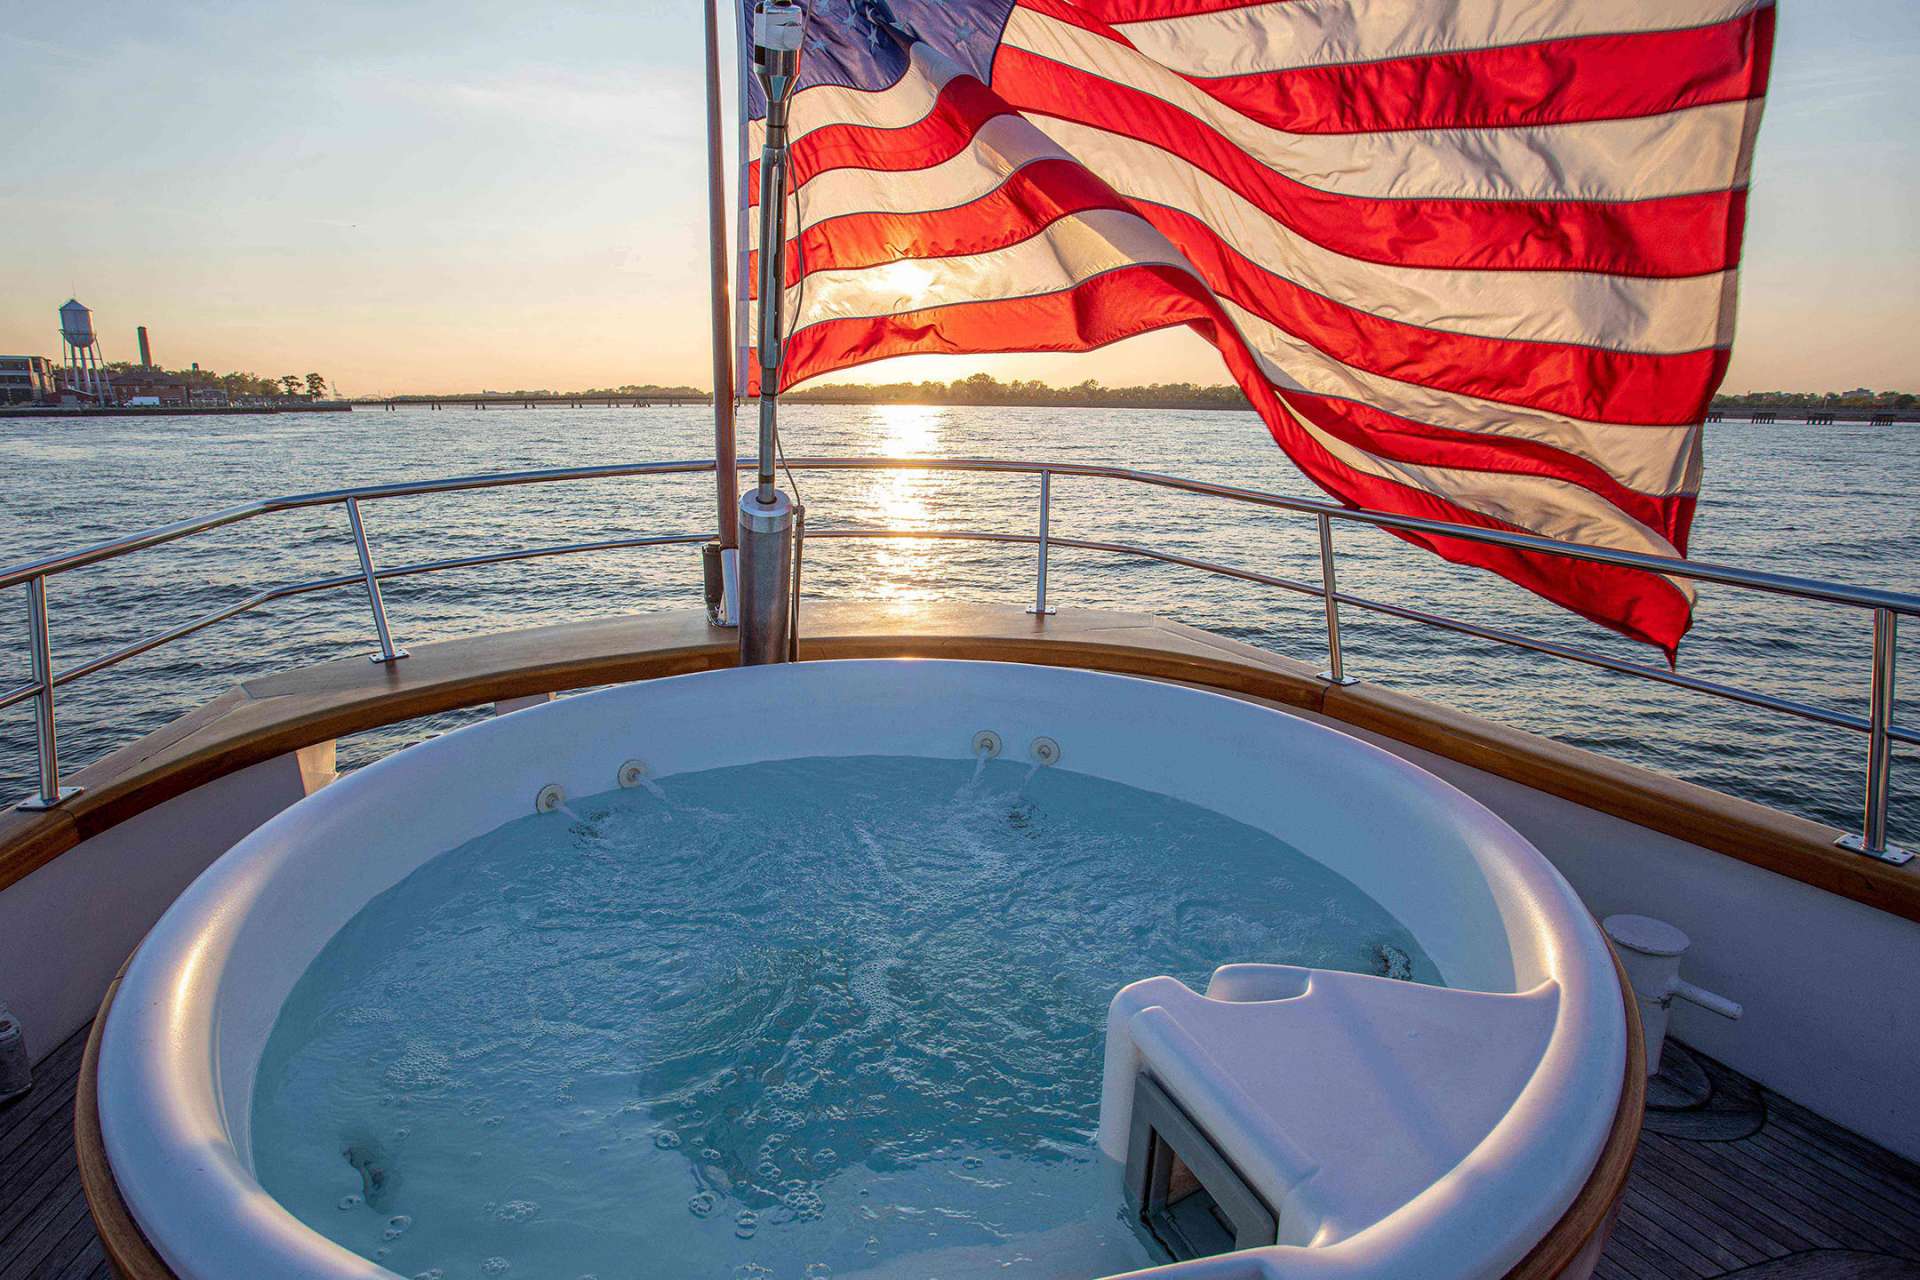 arabella - Sailboat Charter USA & Boat hire in USA - New England, USA - Annapolis - MD, USA - North East  USA - Florida East Coast 4